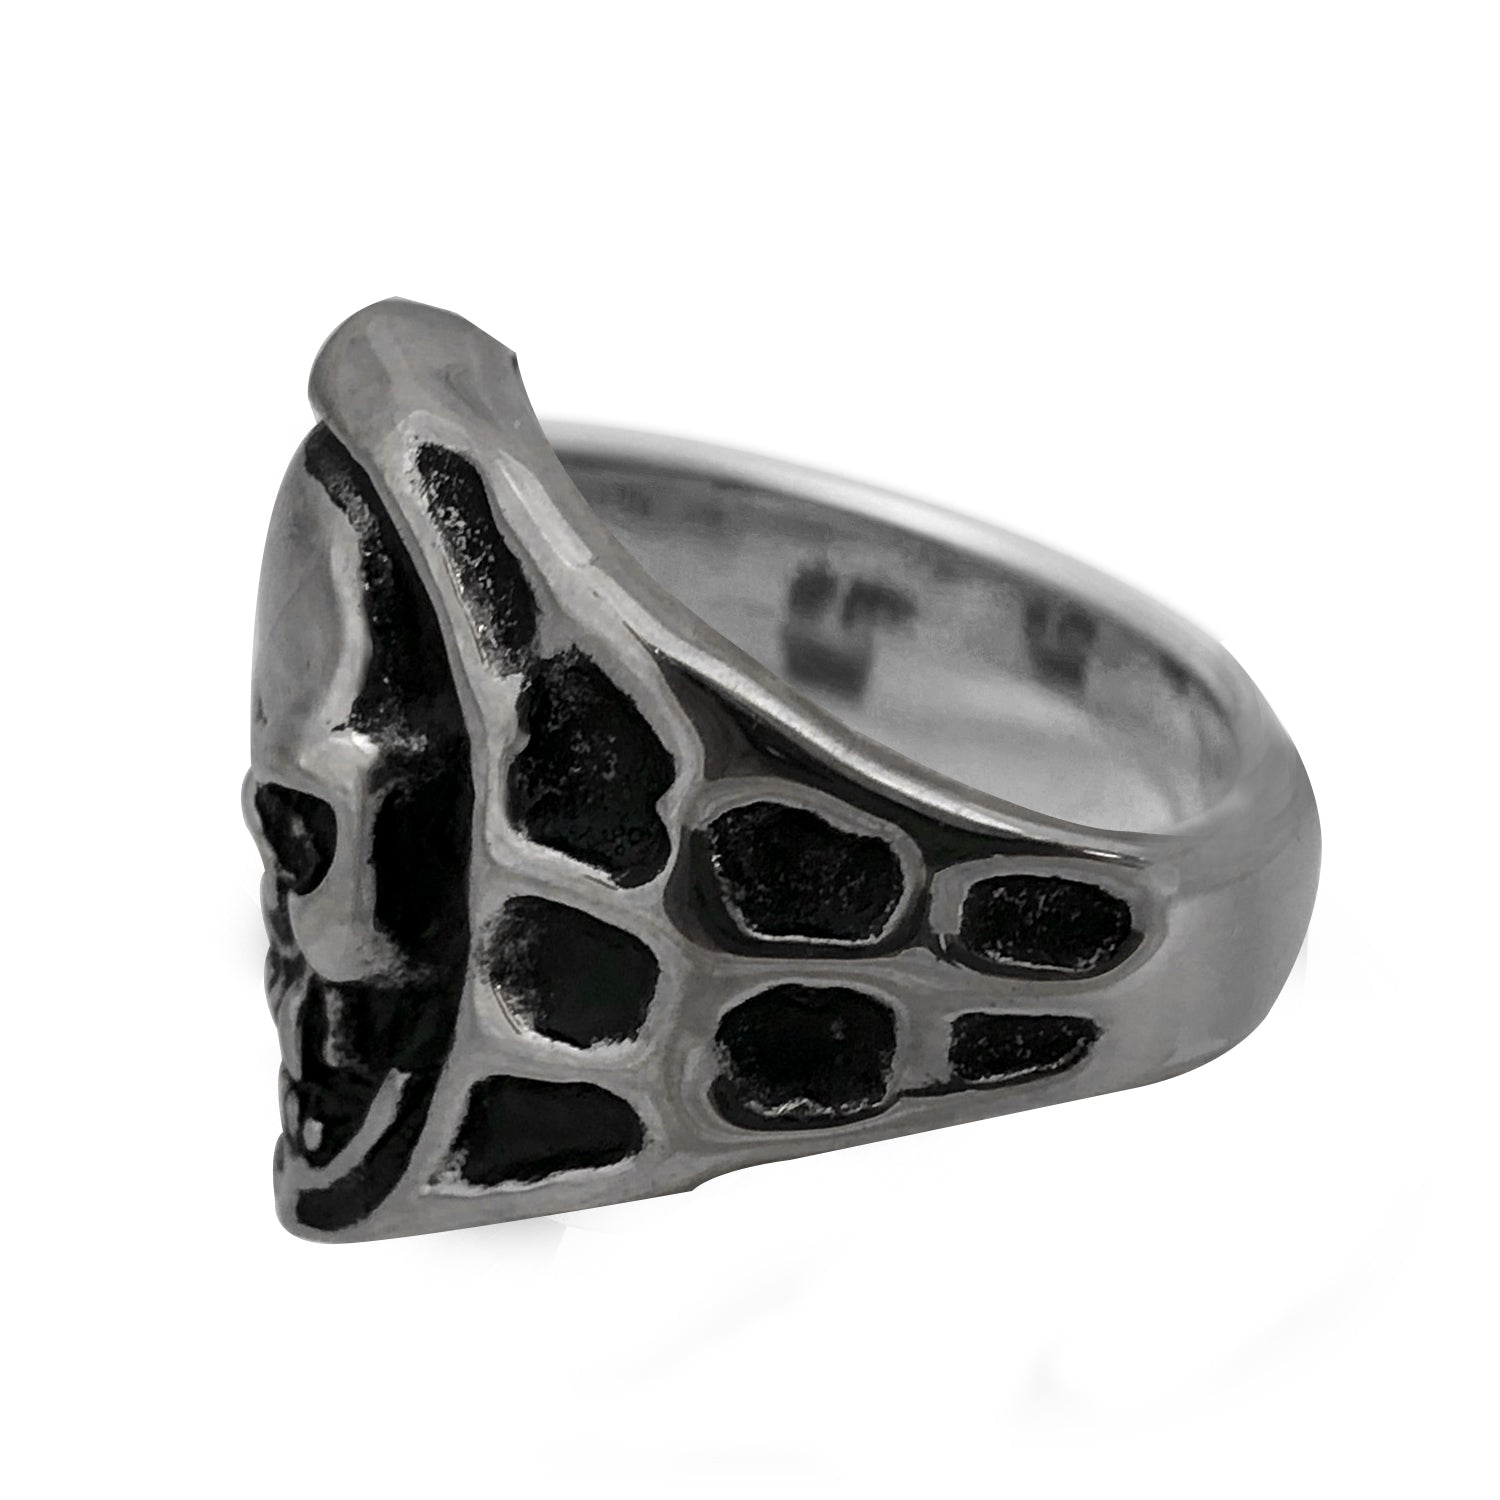 Seven Seas Pirates Skull Steel Black Enameled Ring (US Size 10 R132)